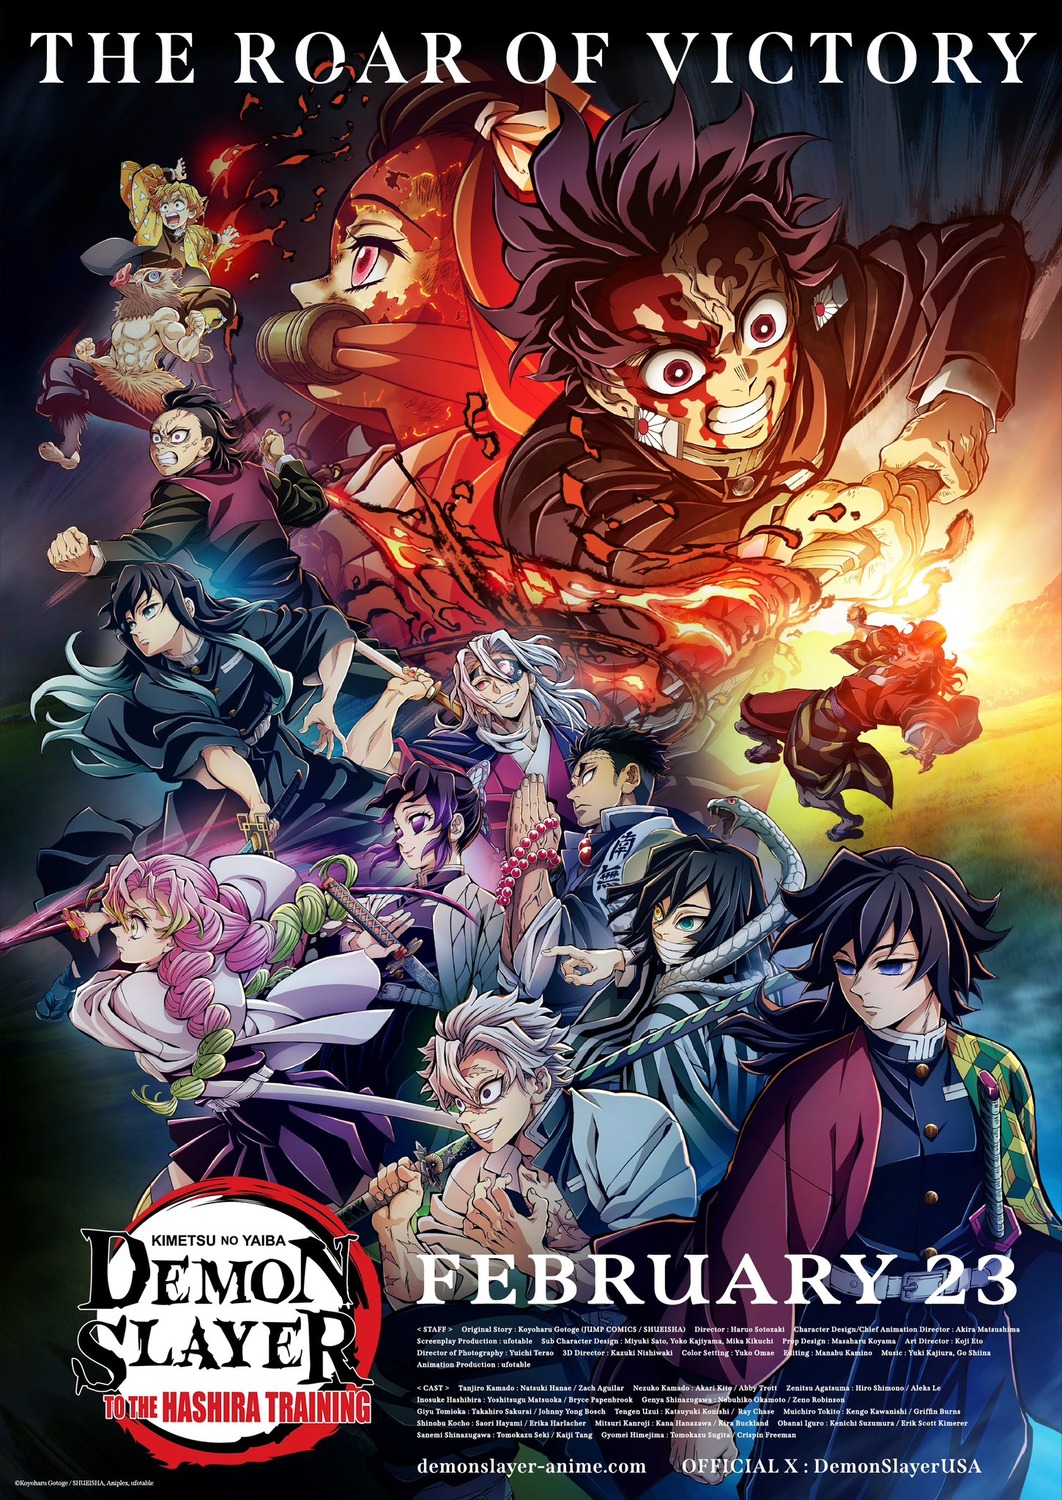 Extra Large Movie Poster Image for Demon Slayer: Kimetsu No Yaiba - To the Hashira Training 